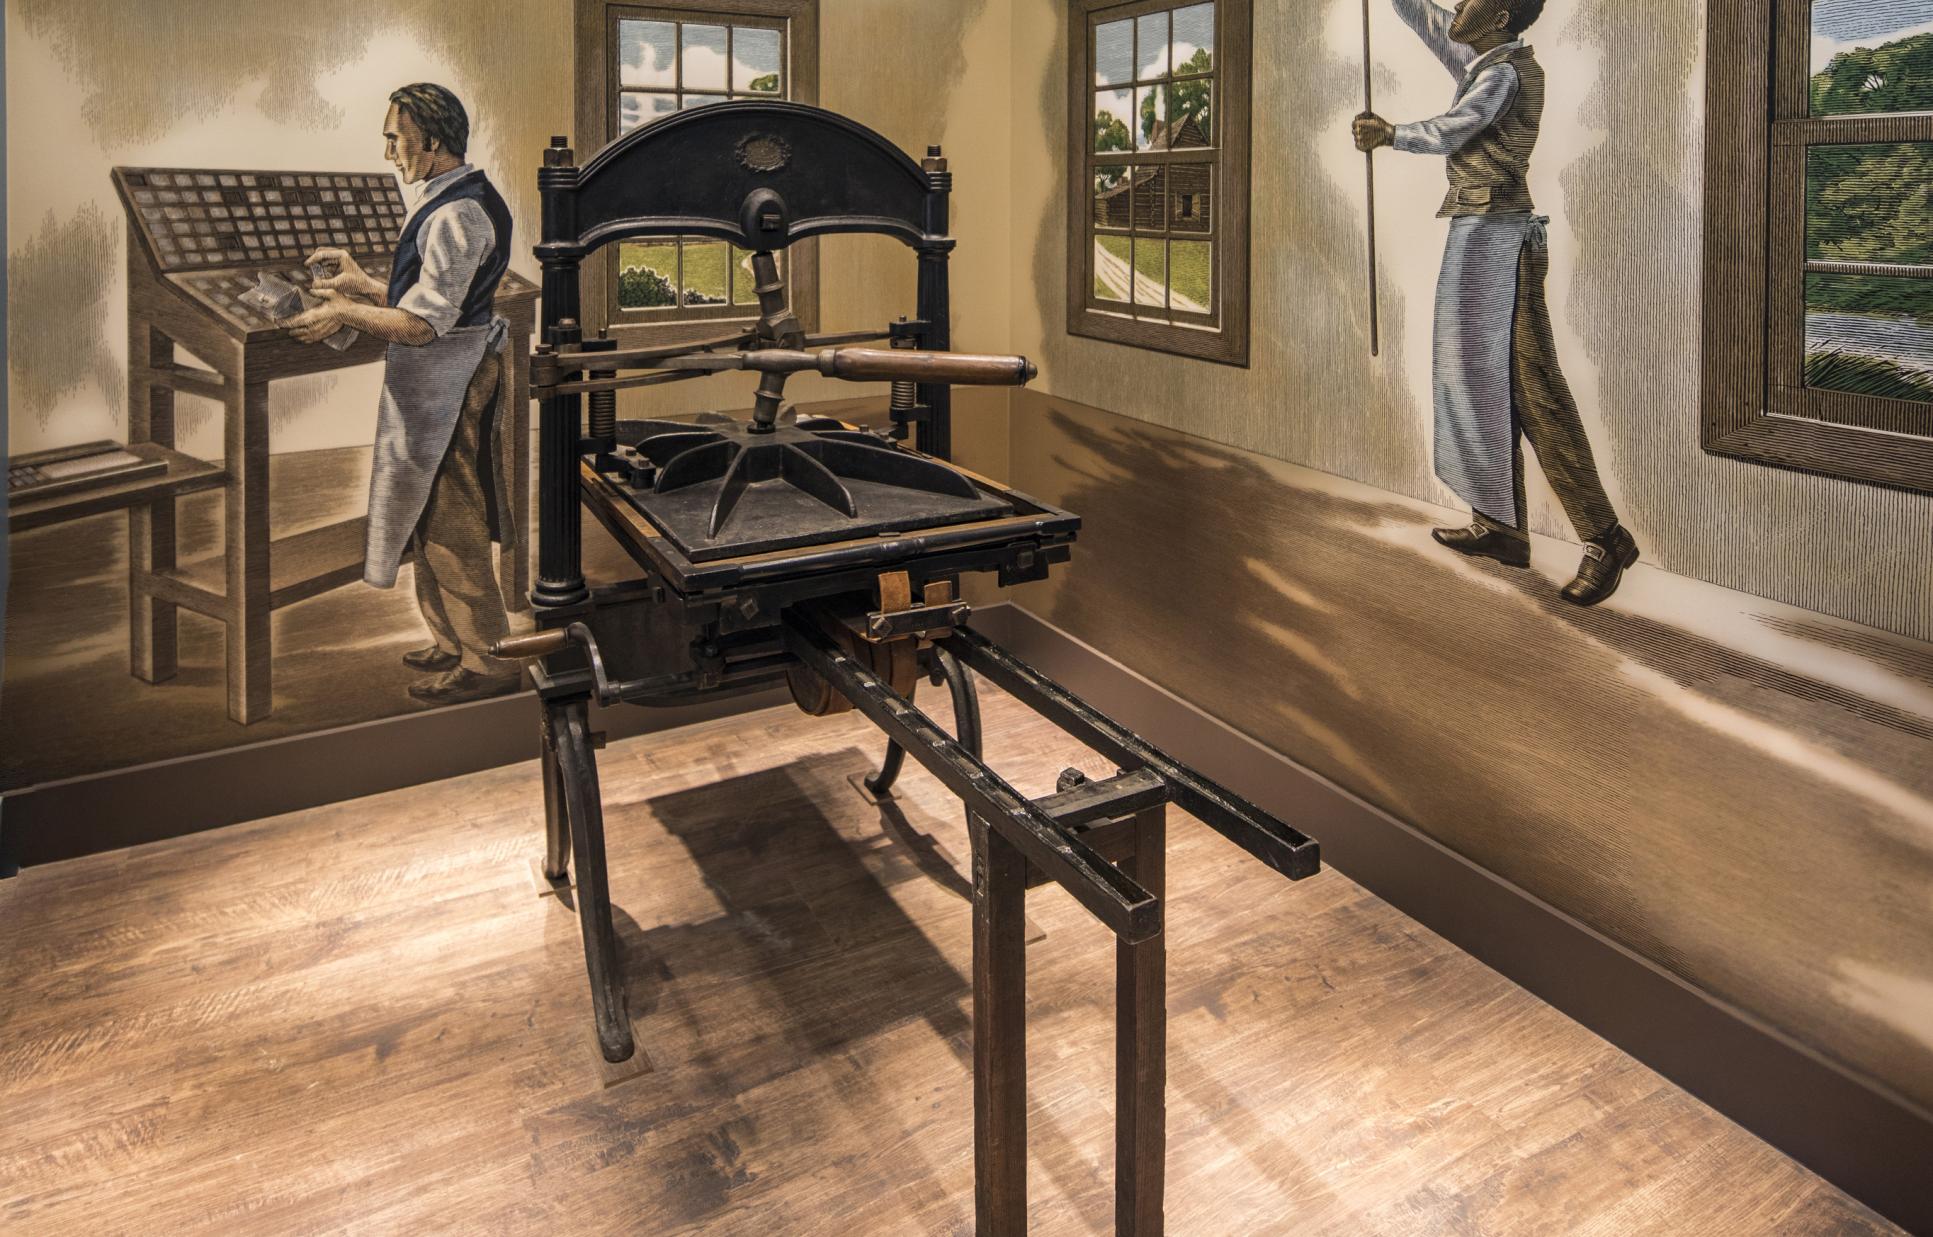 Printing press exhibit in the San Felipe de Austin museum